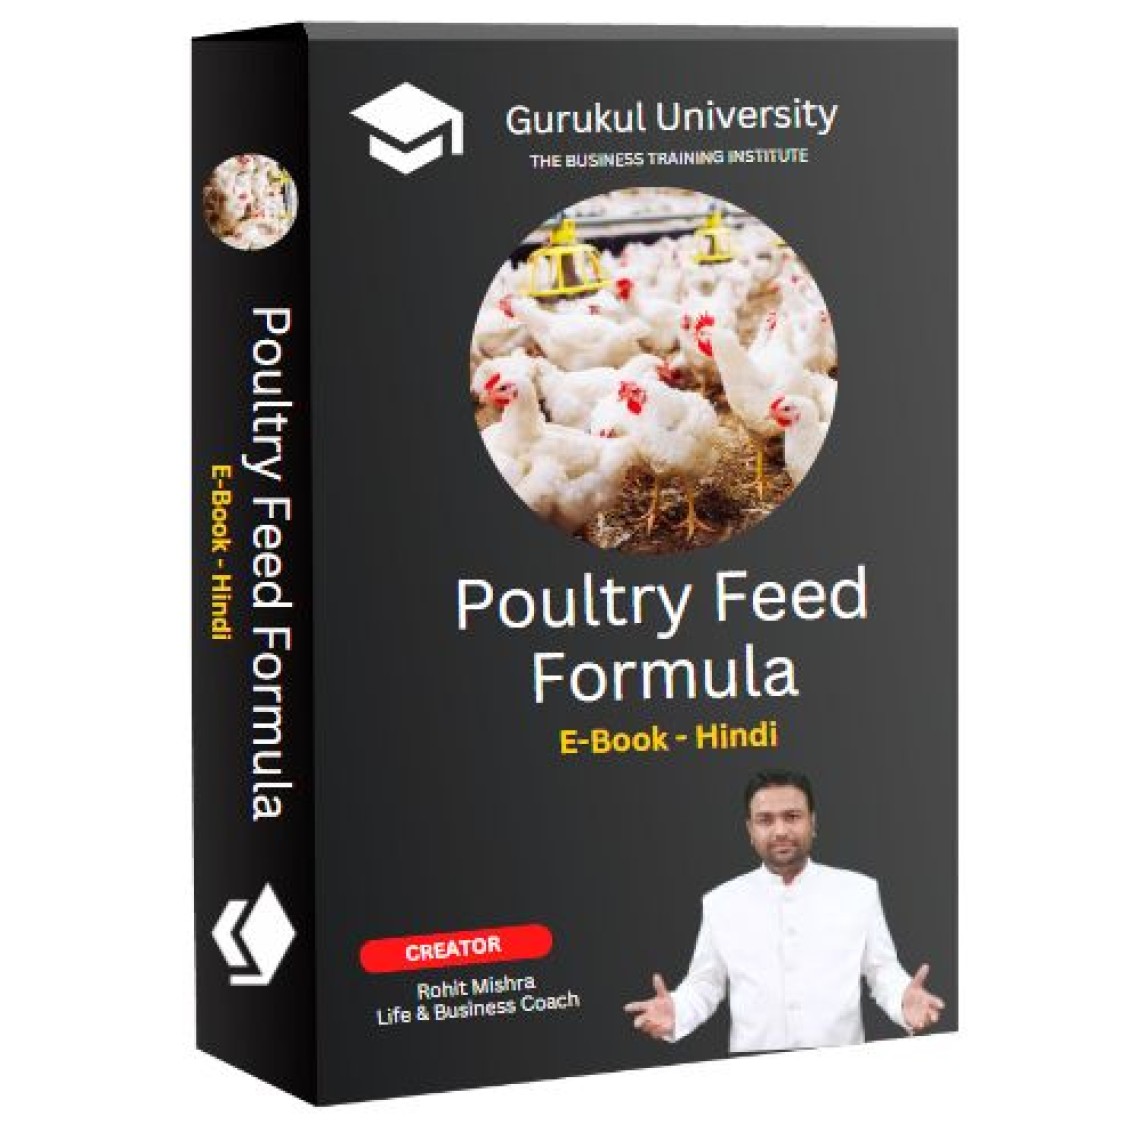 Poultry Feed Formula pdf e-book